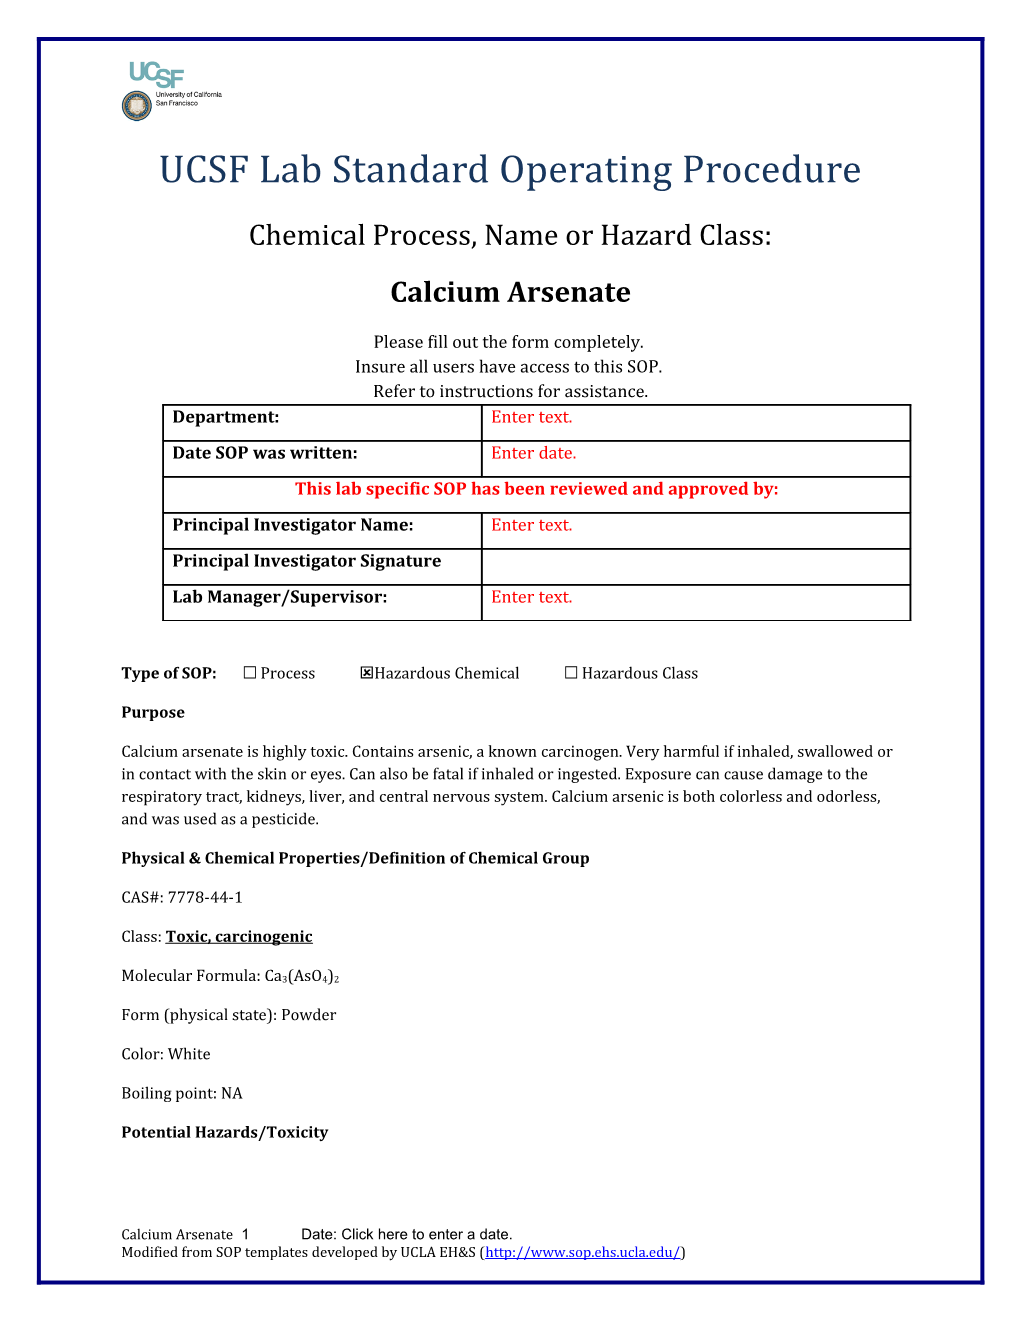 UCSF Lab Standard Operating Procedure s39